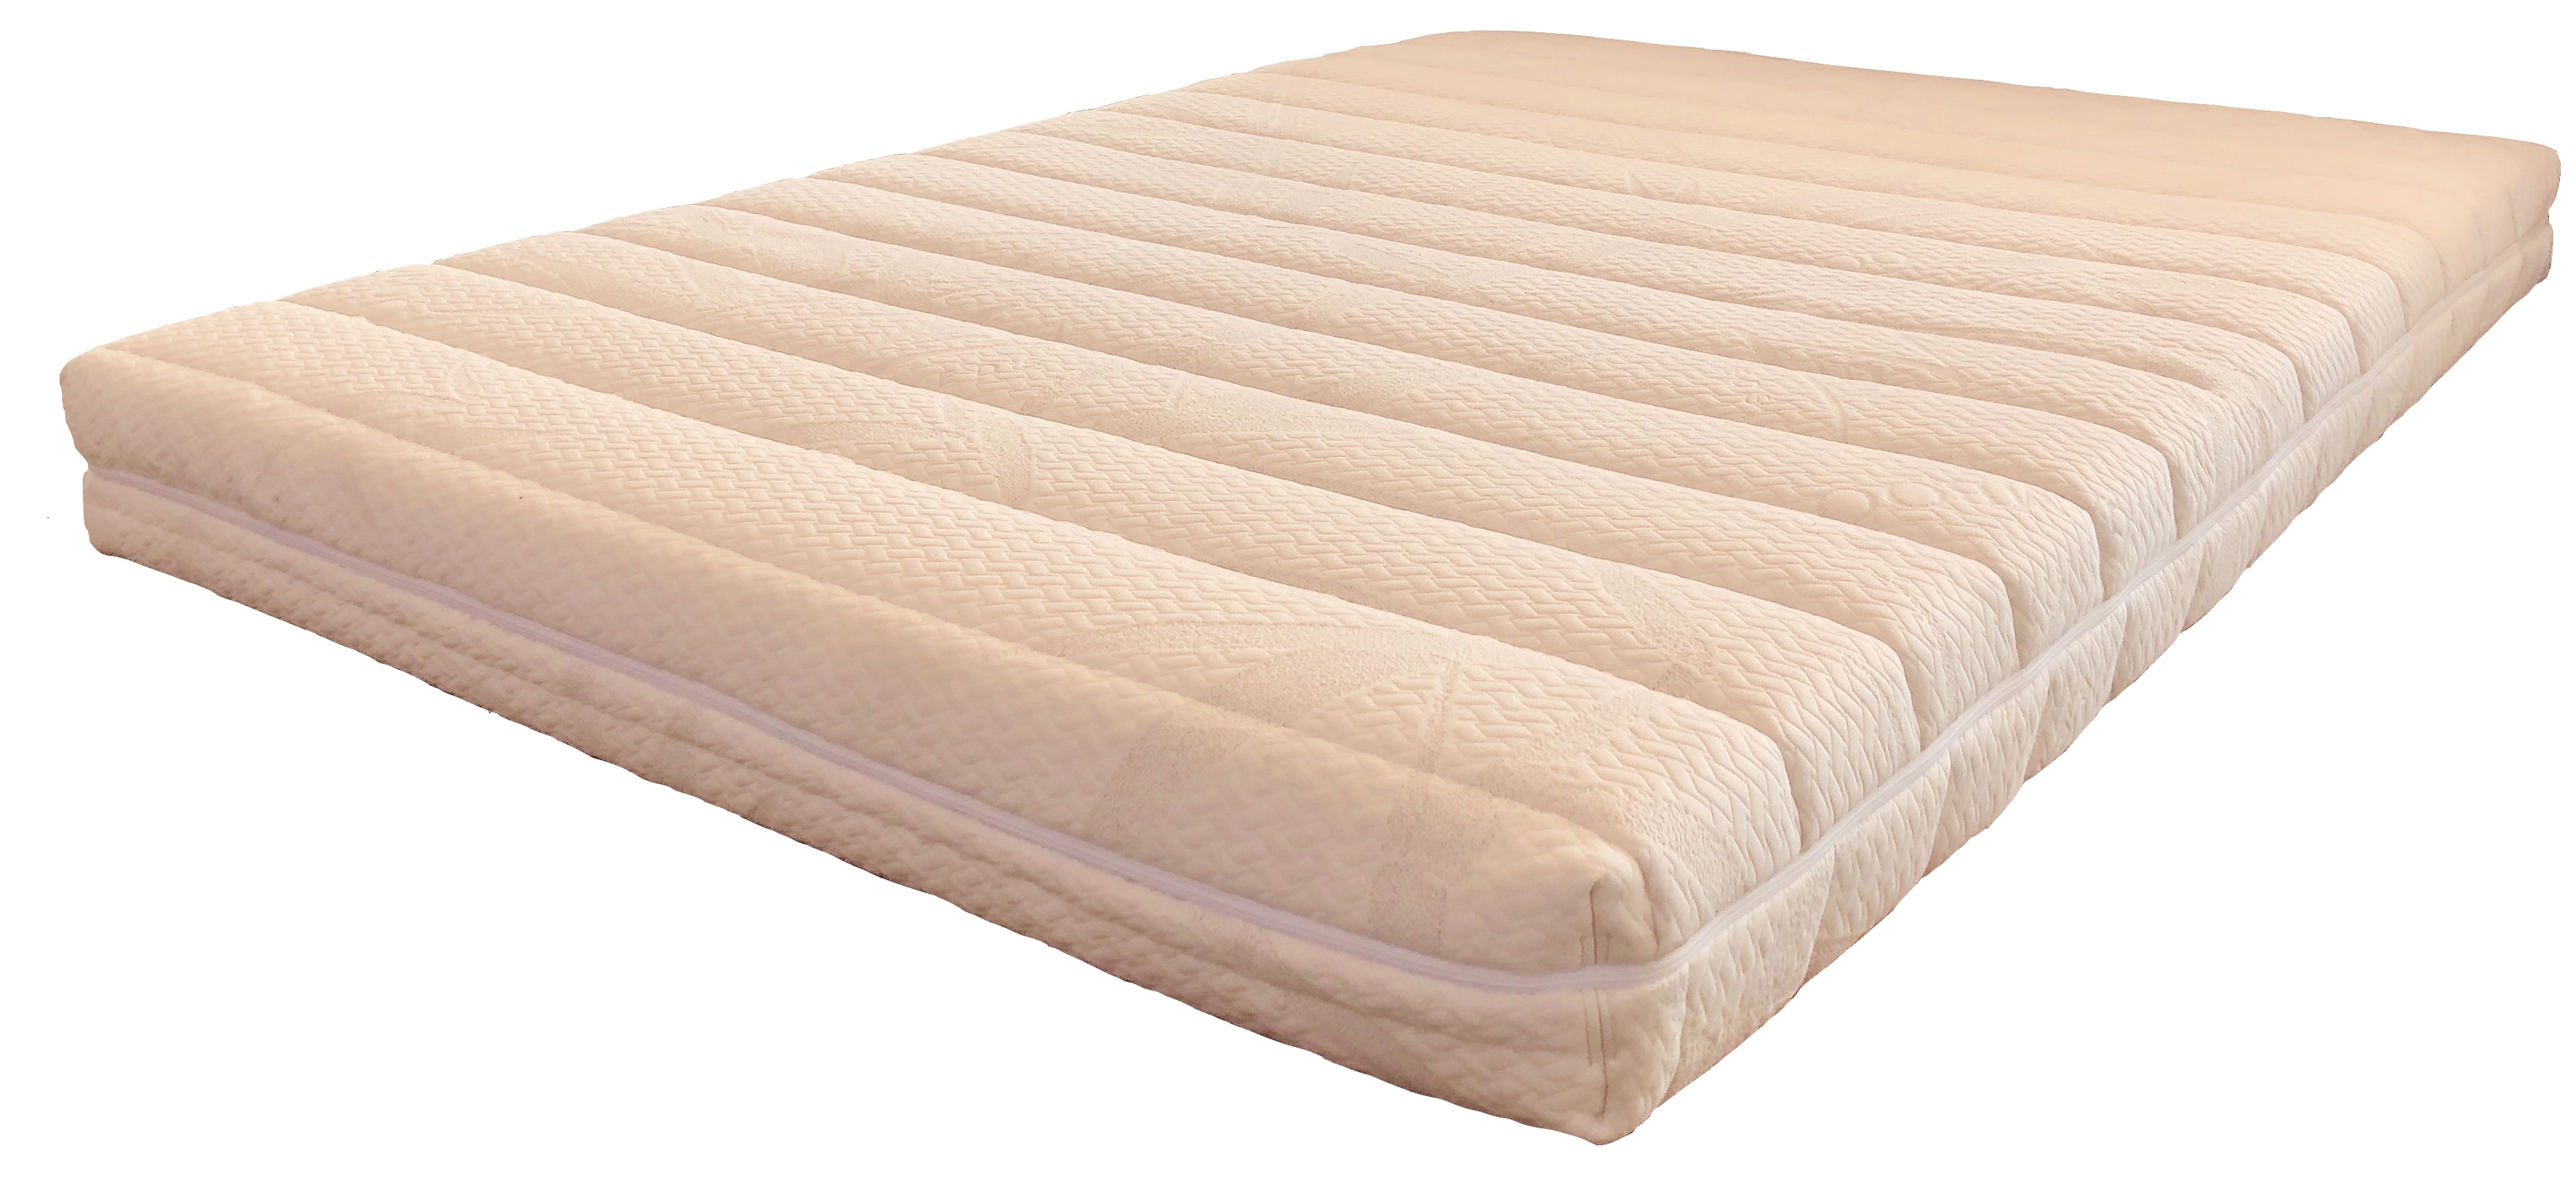 single latex mattress sale